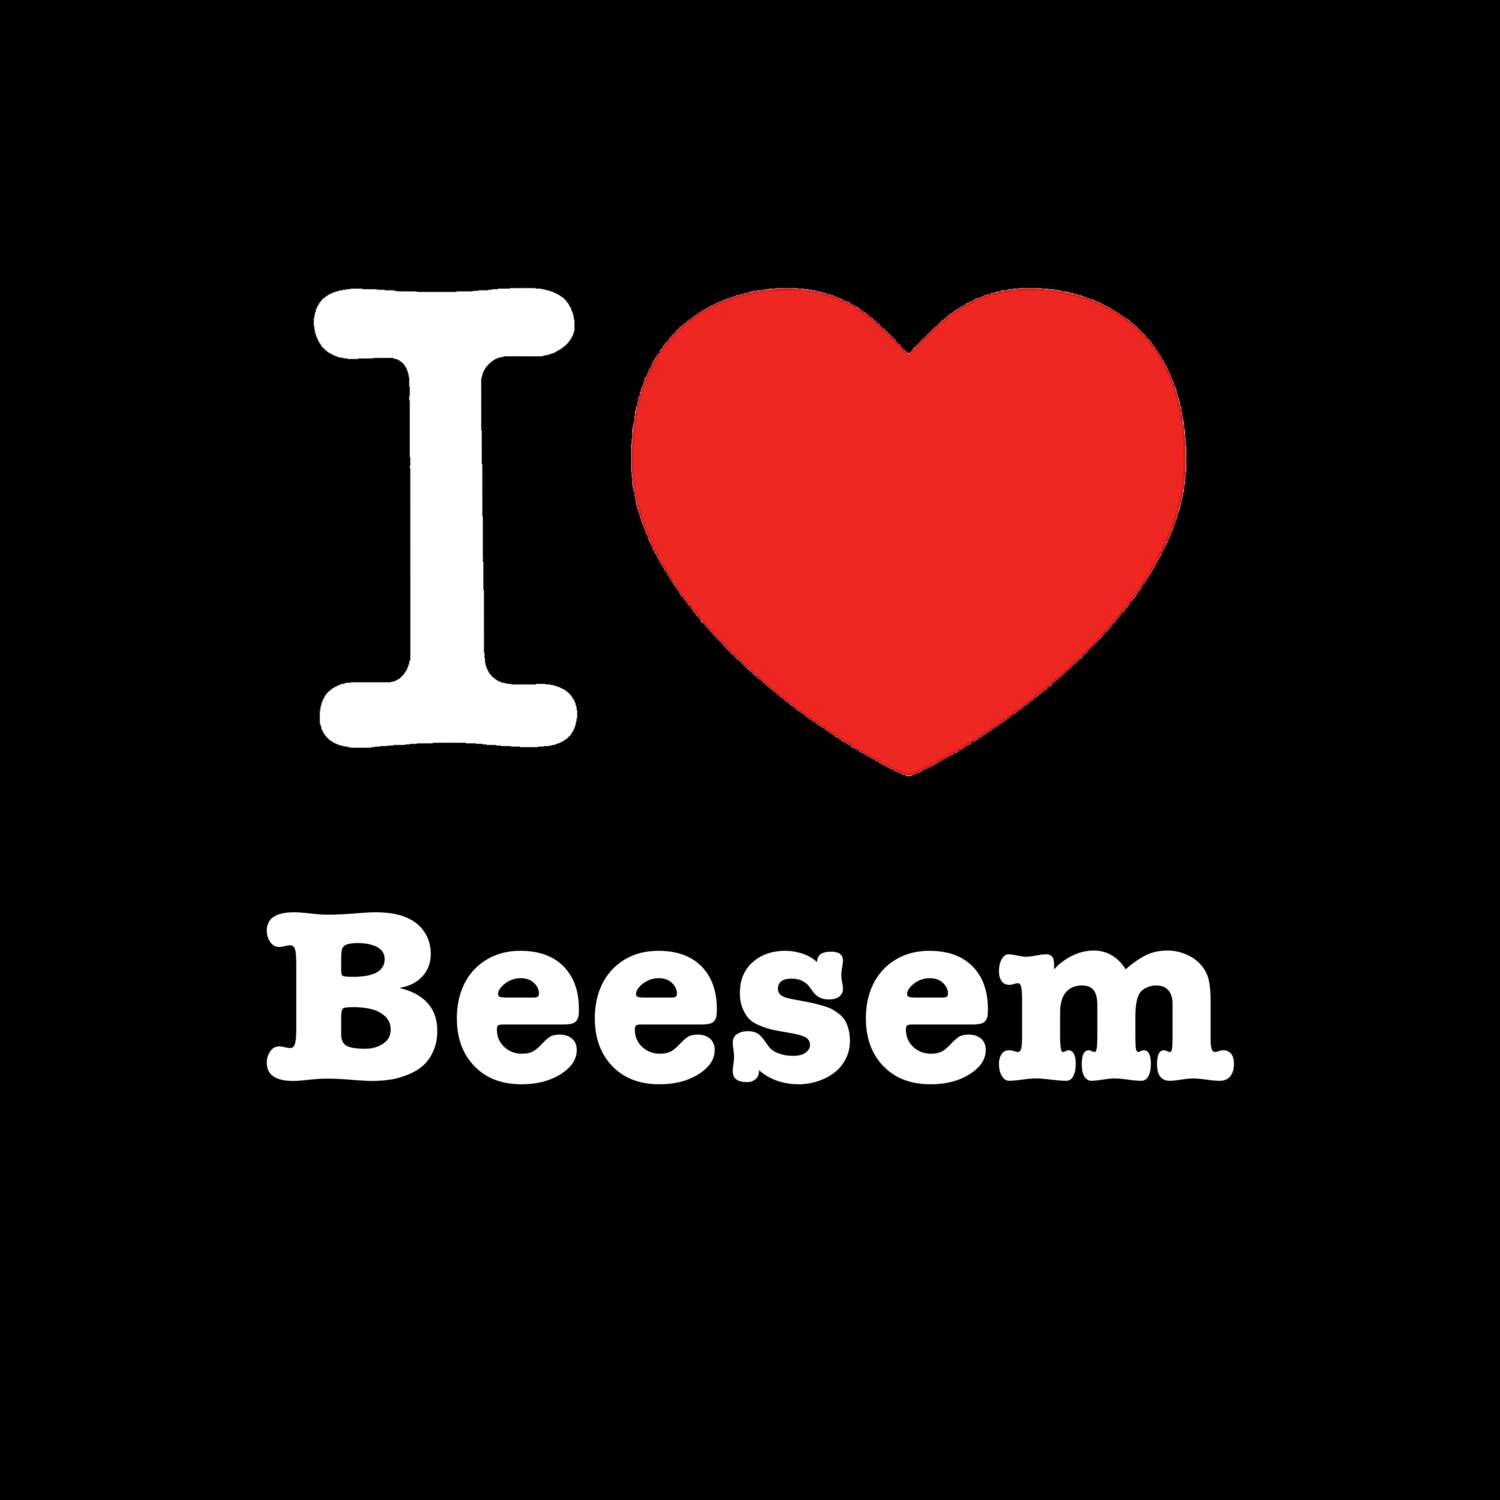 Beesem T-Shirt »I love«